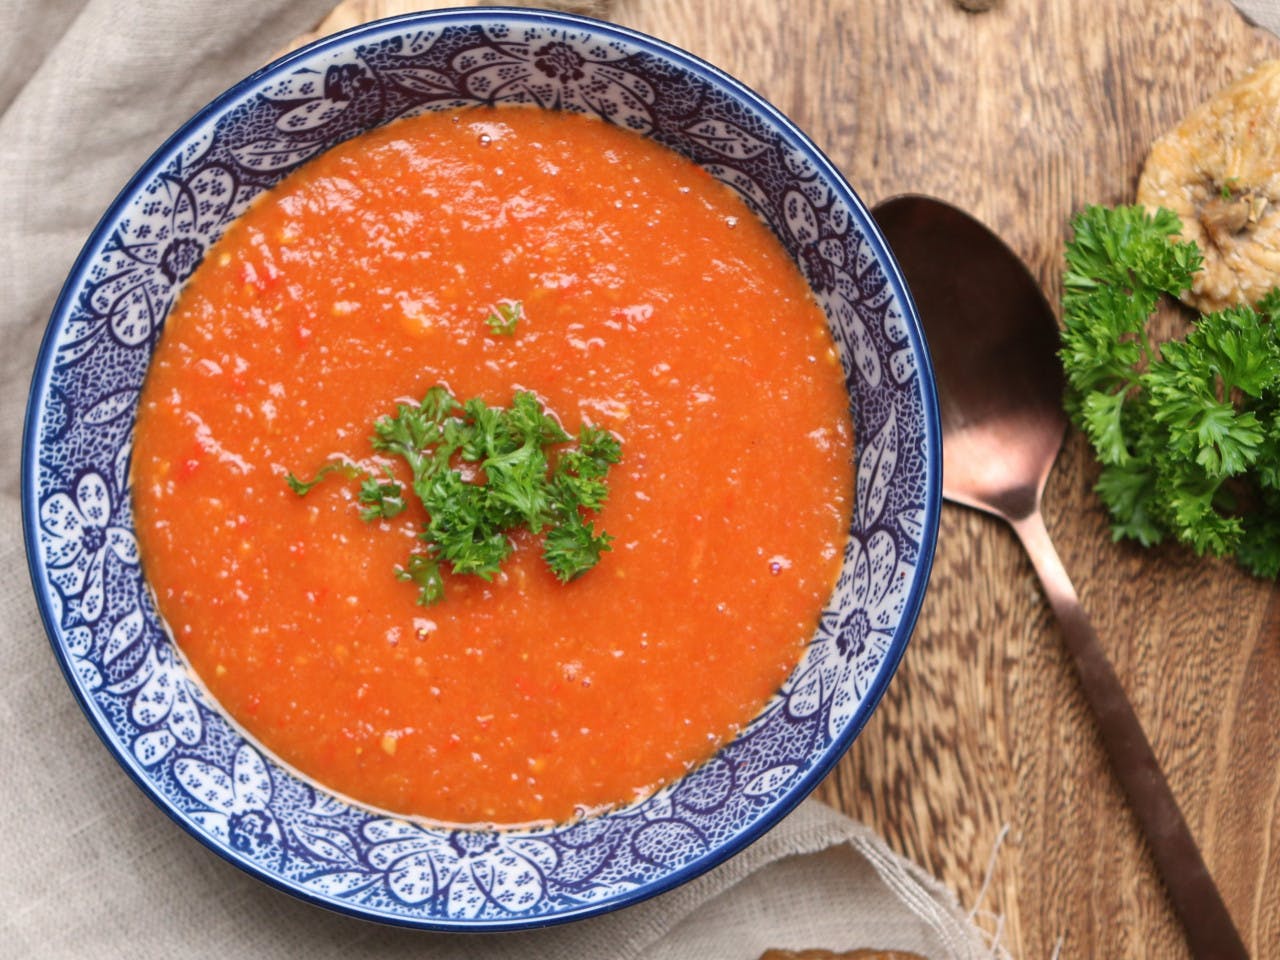 Tasty tomato soup with secret Ingredient